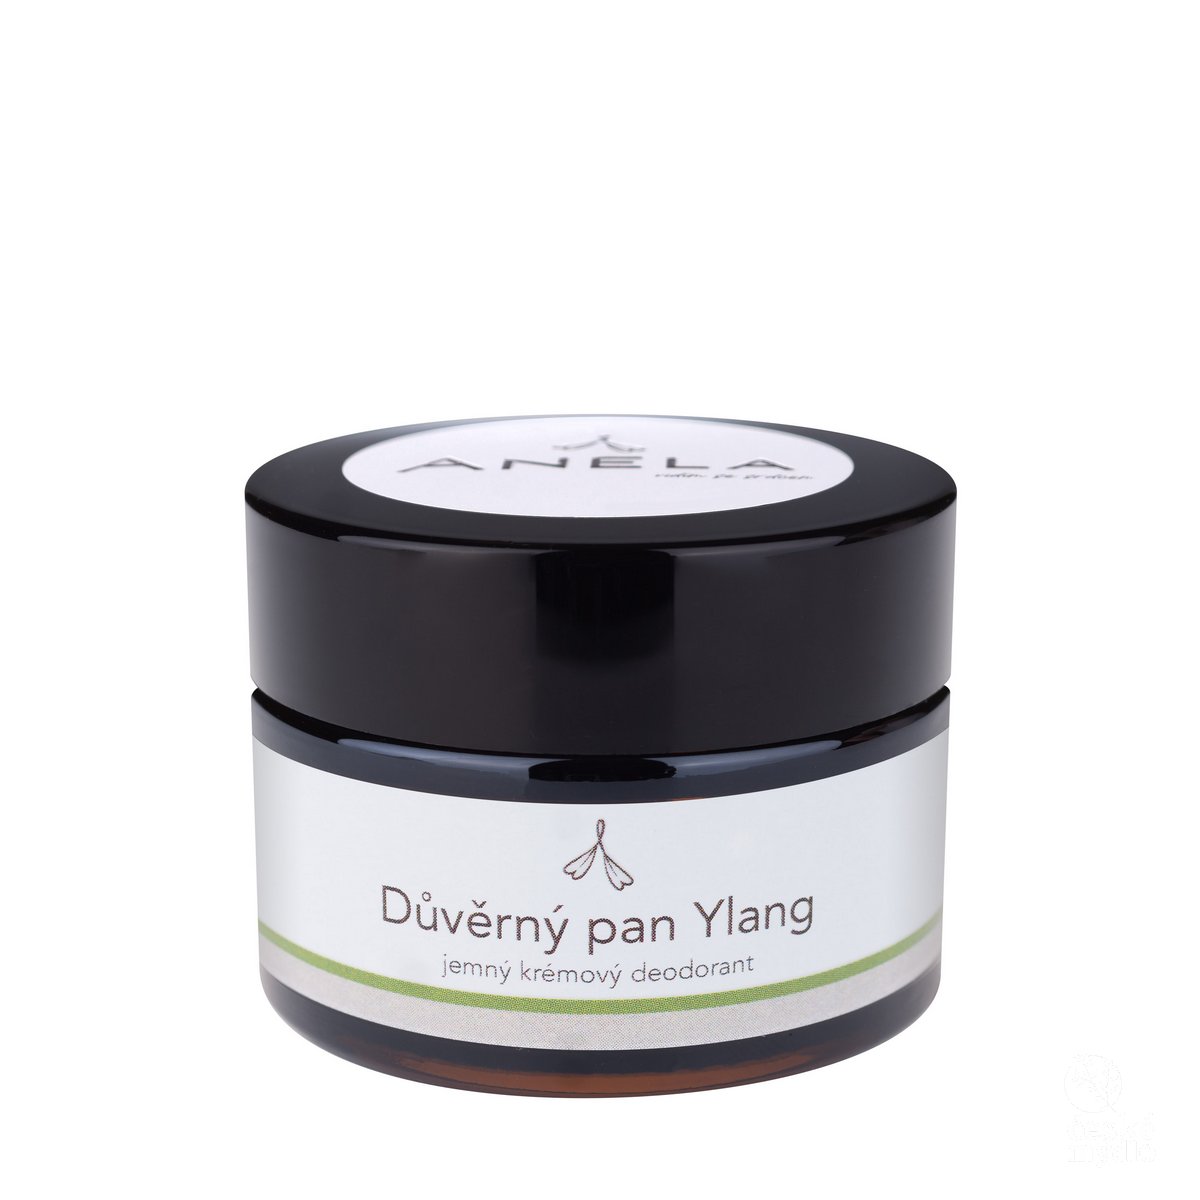 Krémový deodorant Důvěrný pan Ylang 30ml